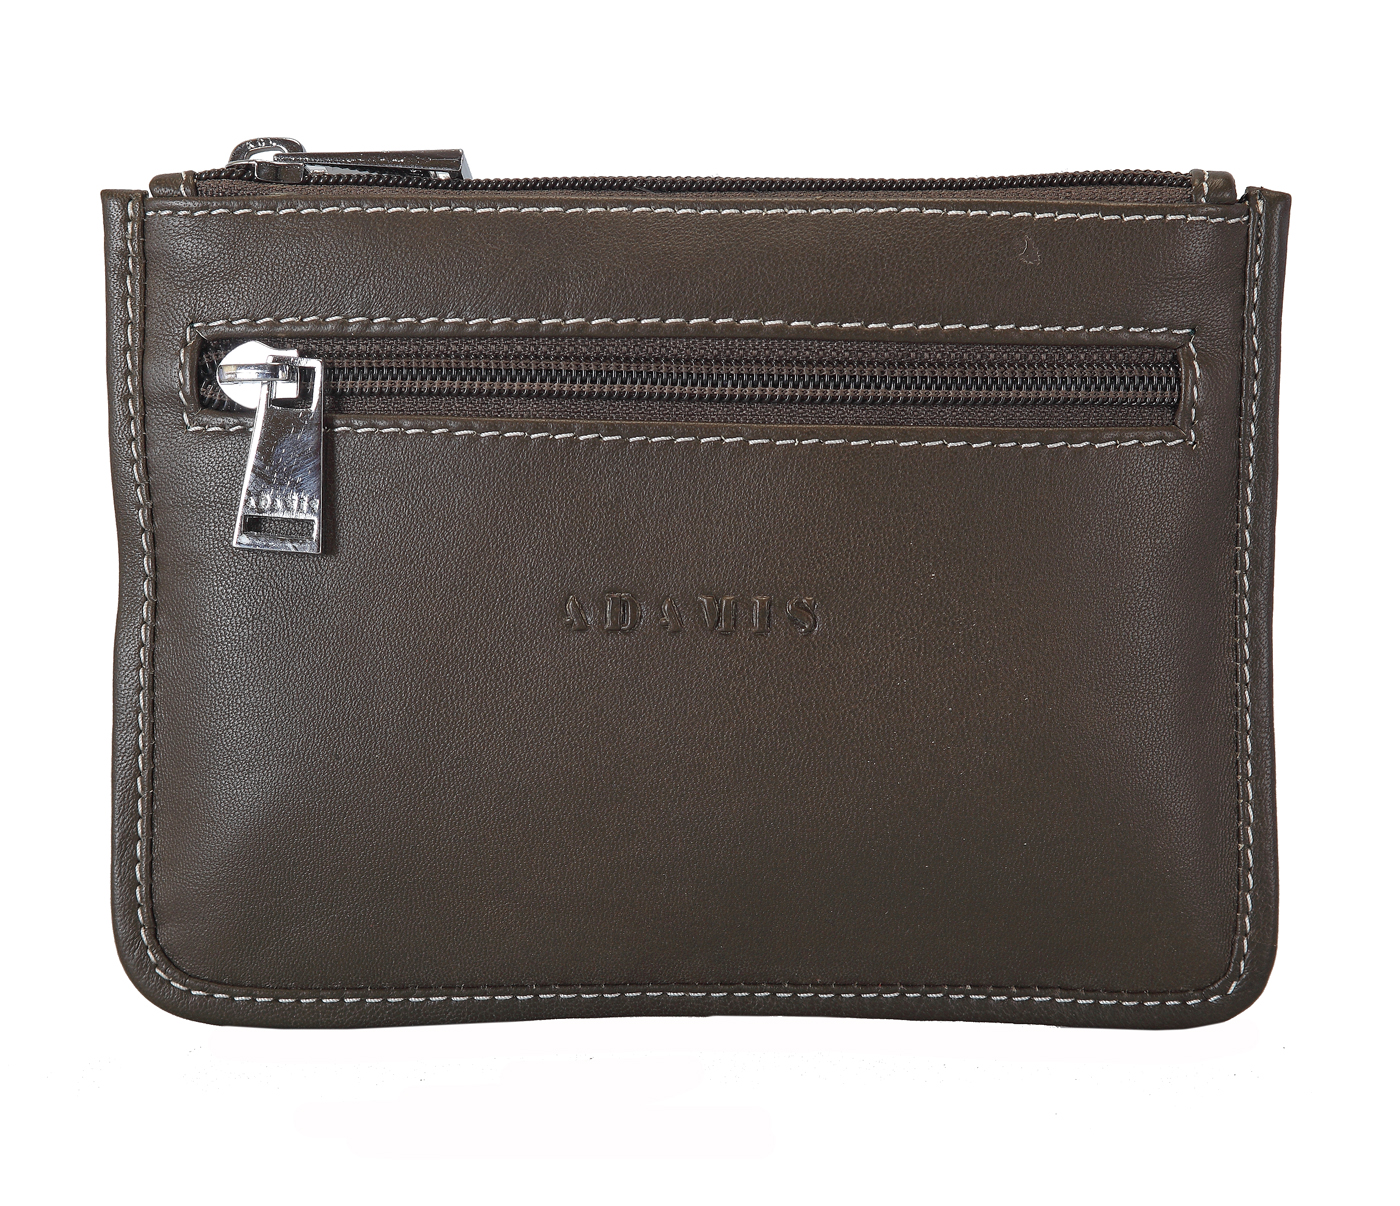 W228--Unisex multi purpose pouch in Genuine Leather - Brown.